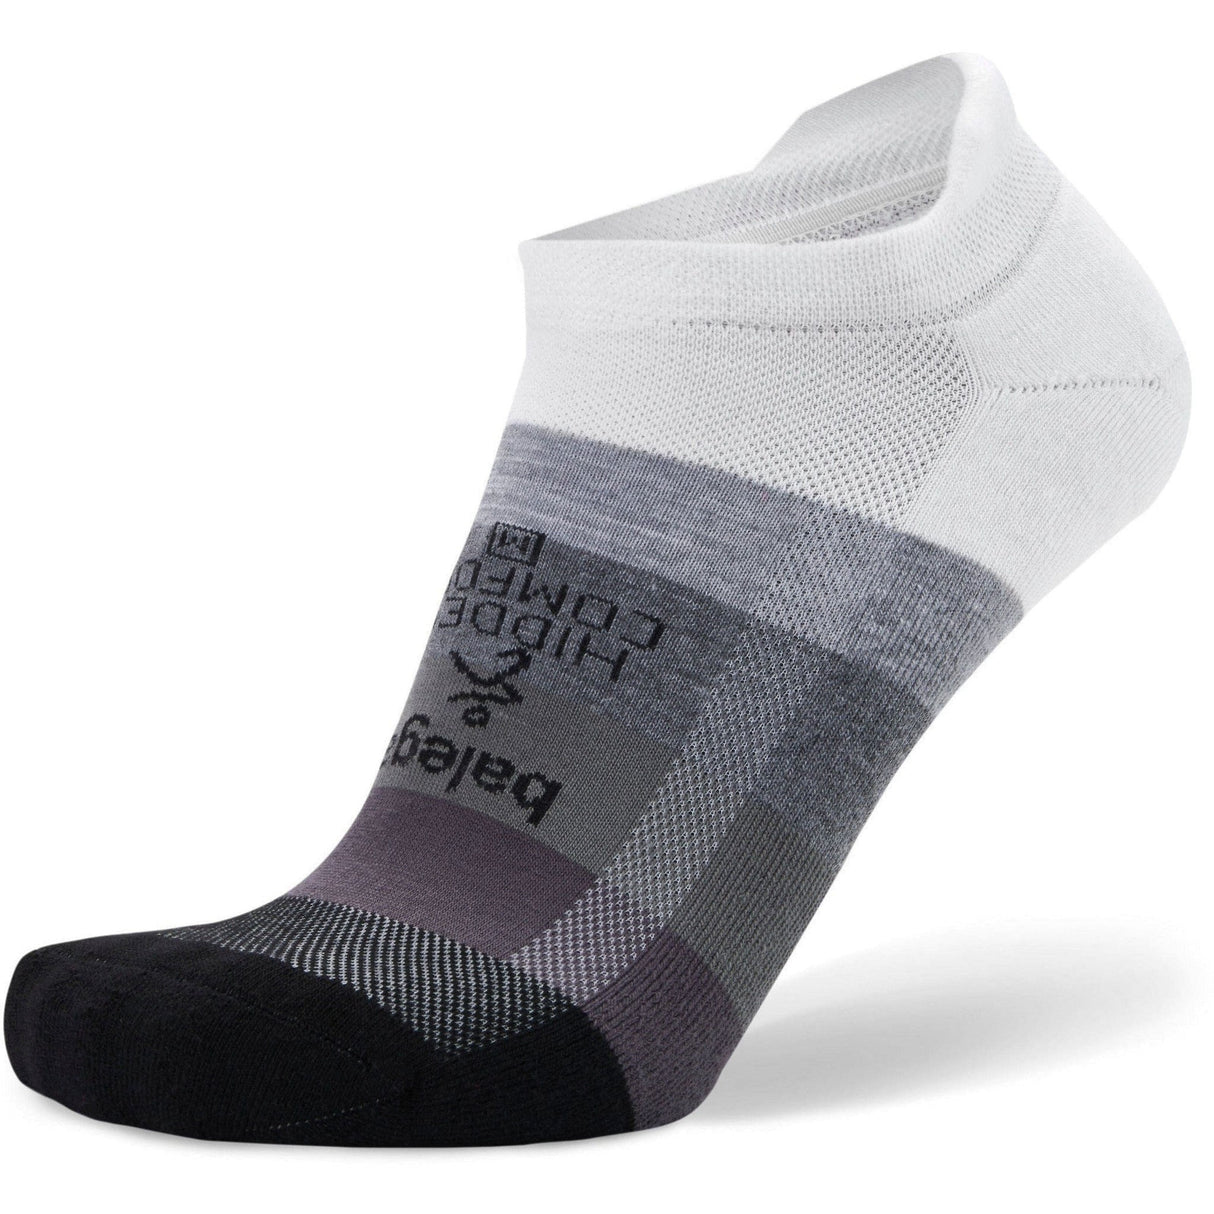 Balega Hidden Comfort No Show Tab Socks - Clearance  -  Large / White/Asphalt